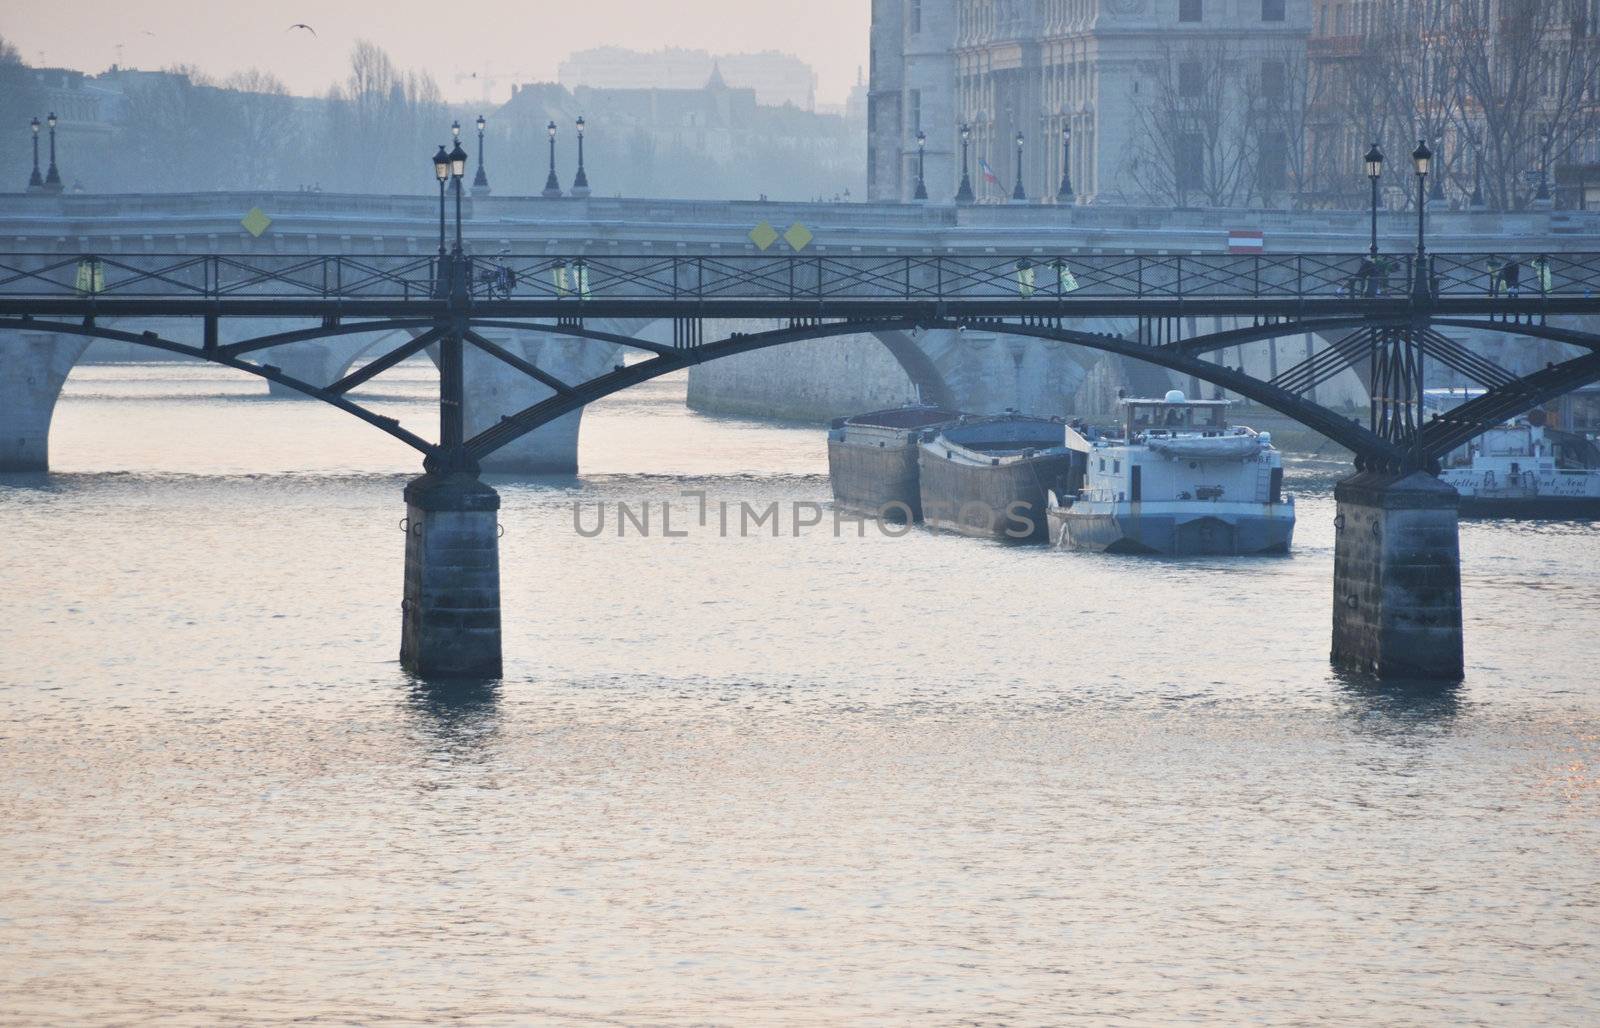 The river Seine in Paris by dutourdumonde